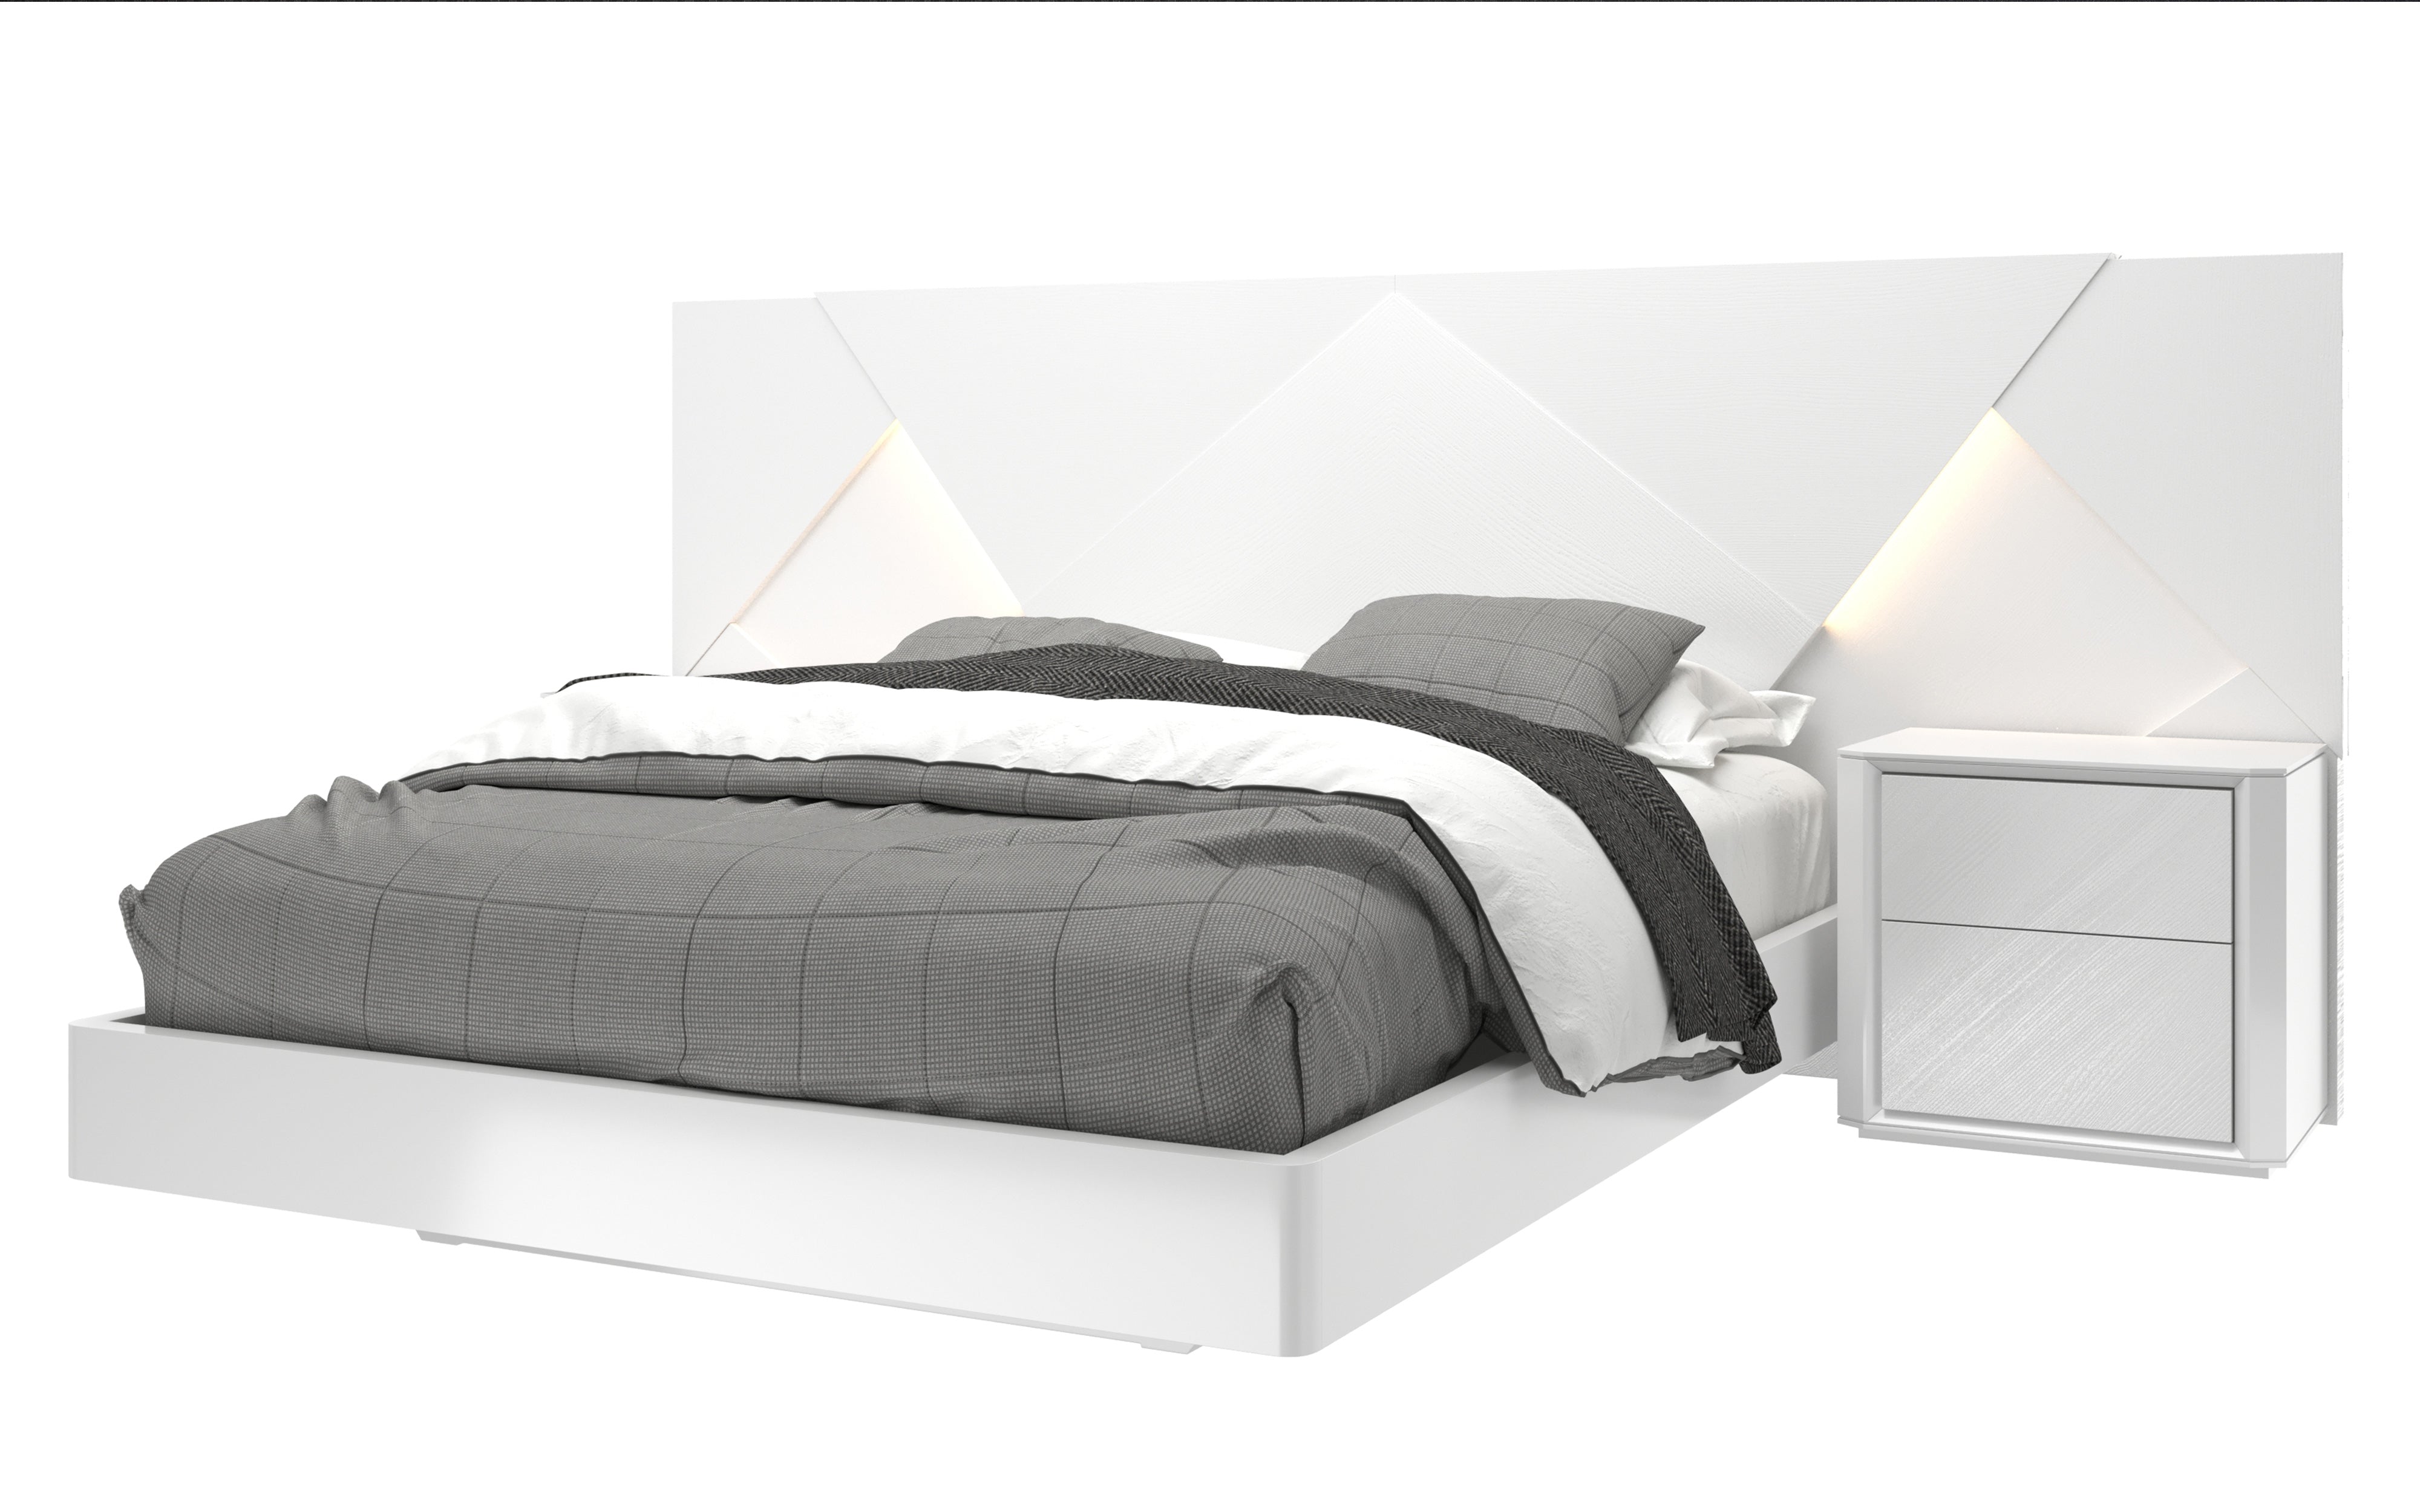 Heike White Premium Bedroom